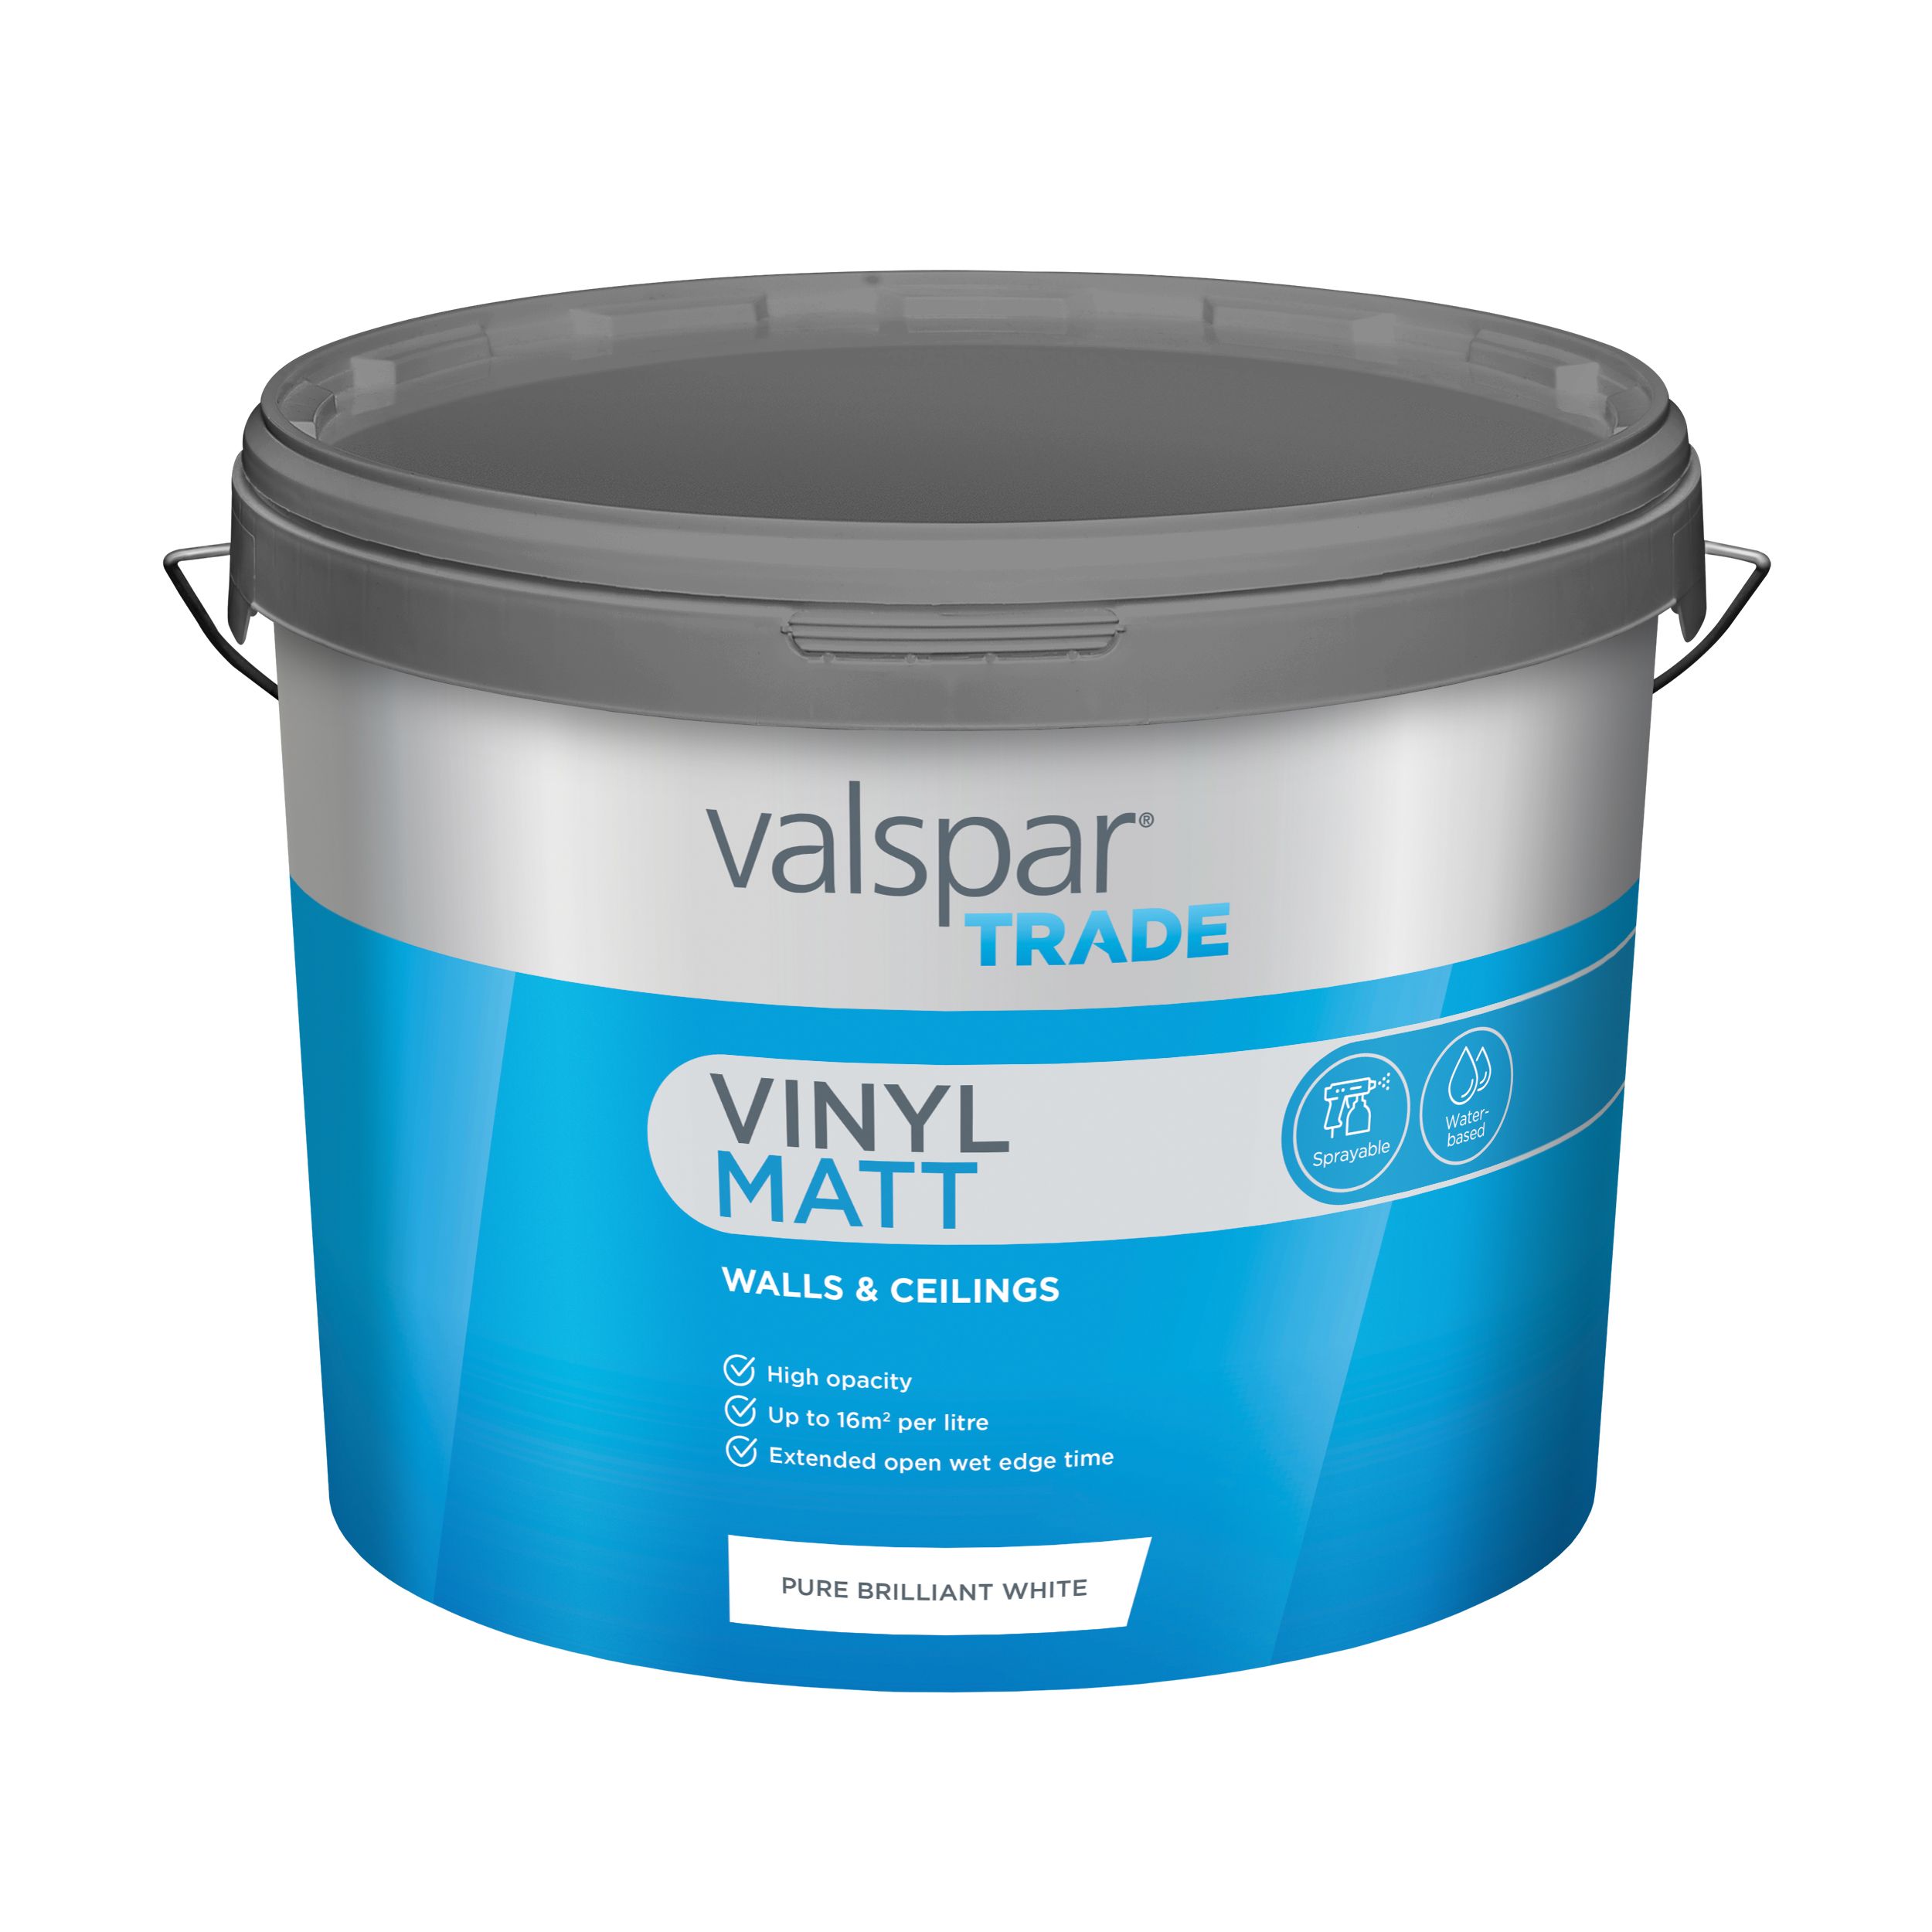 Valspar Trade Walls & Ceilings Pure Brilliant White Vinyl matt Emulsion paint, 10L